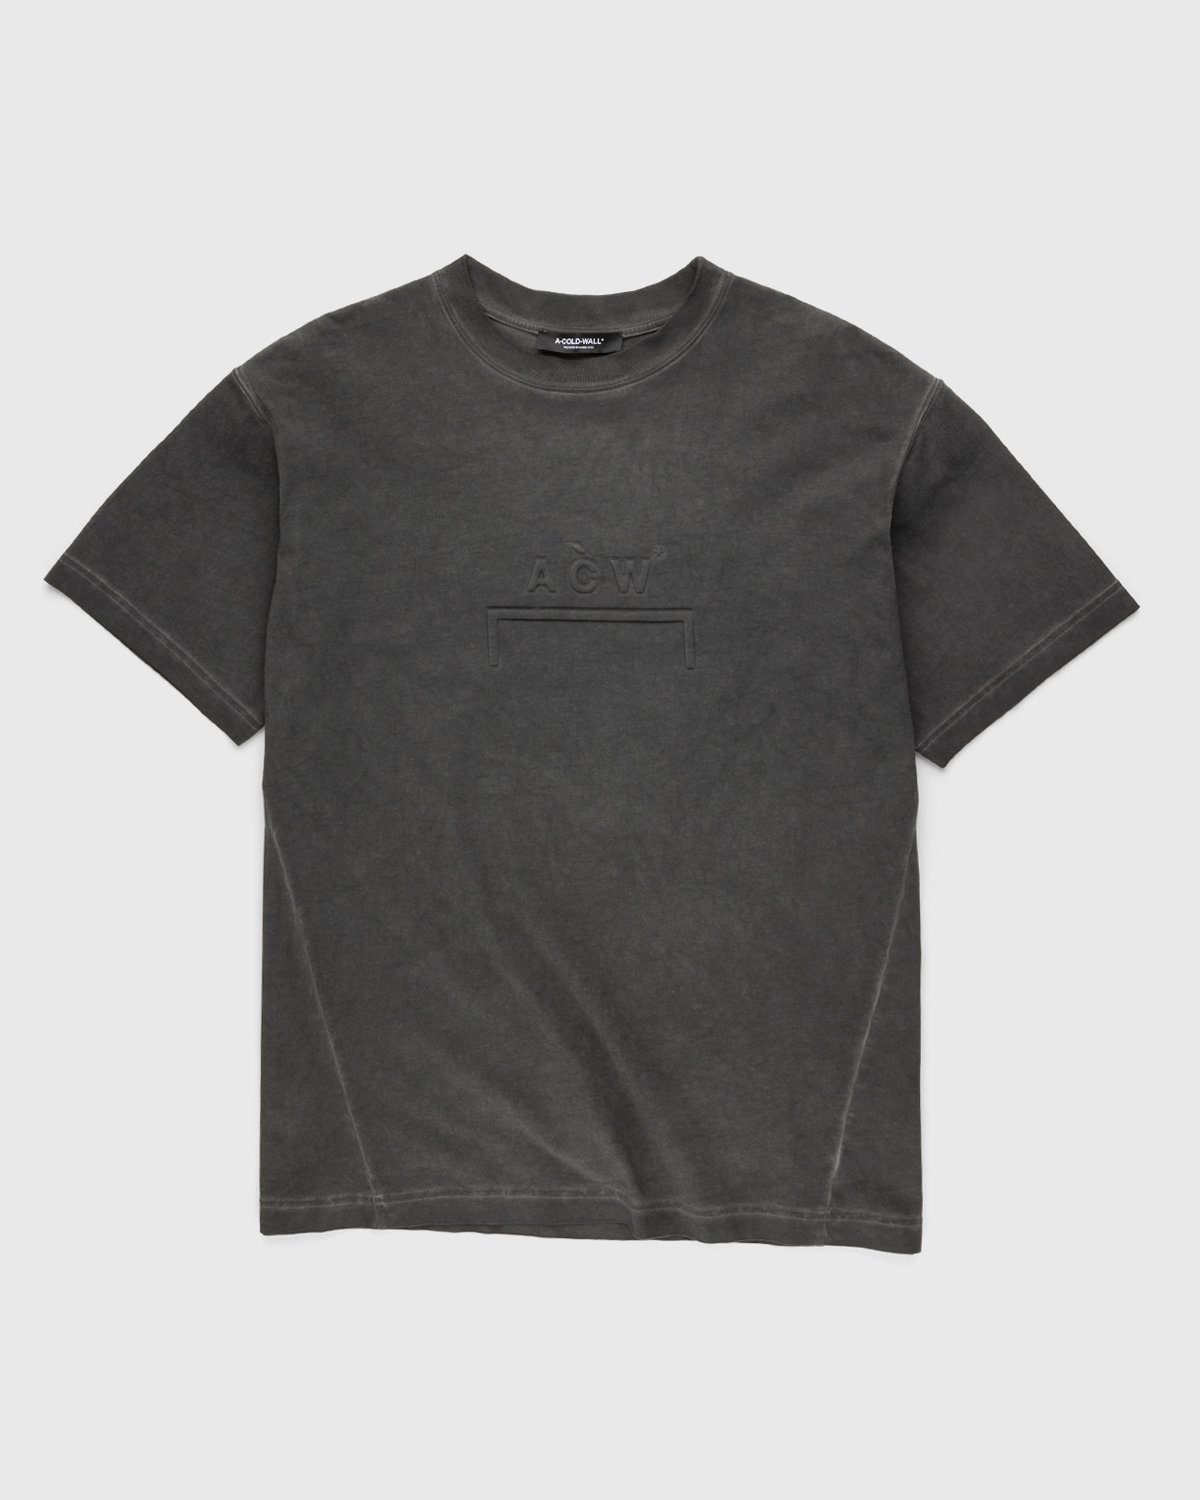 A-Cold-Wall* – Solarized Mondrian T-Shirt Black - Caps - Black - Image 1